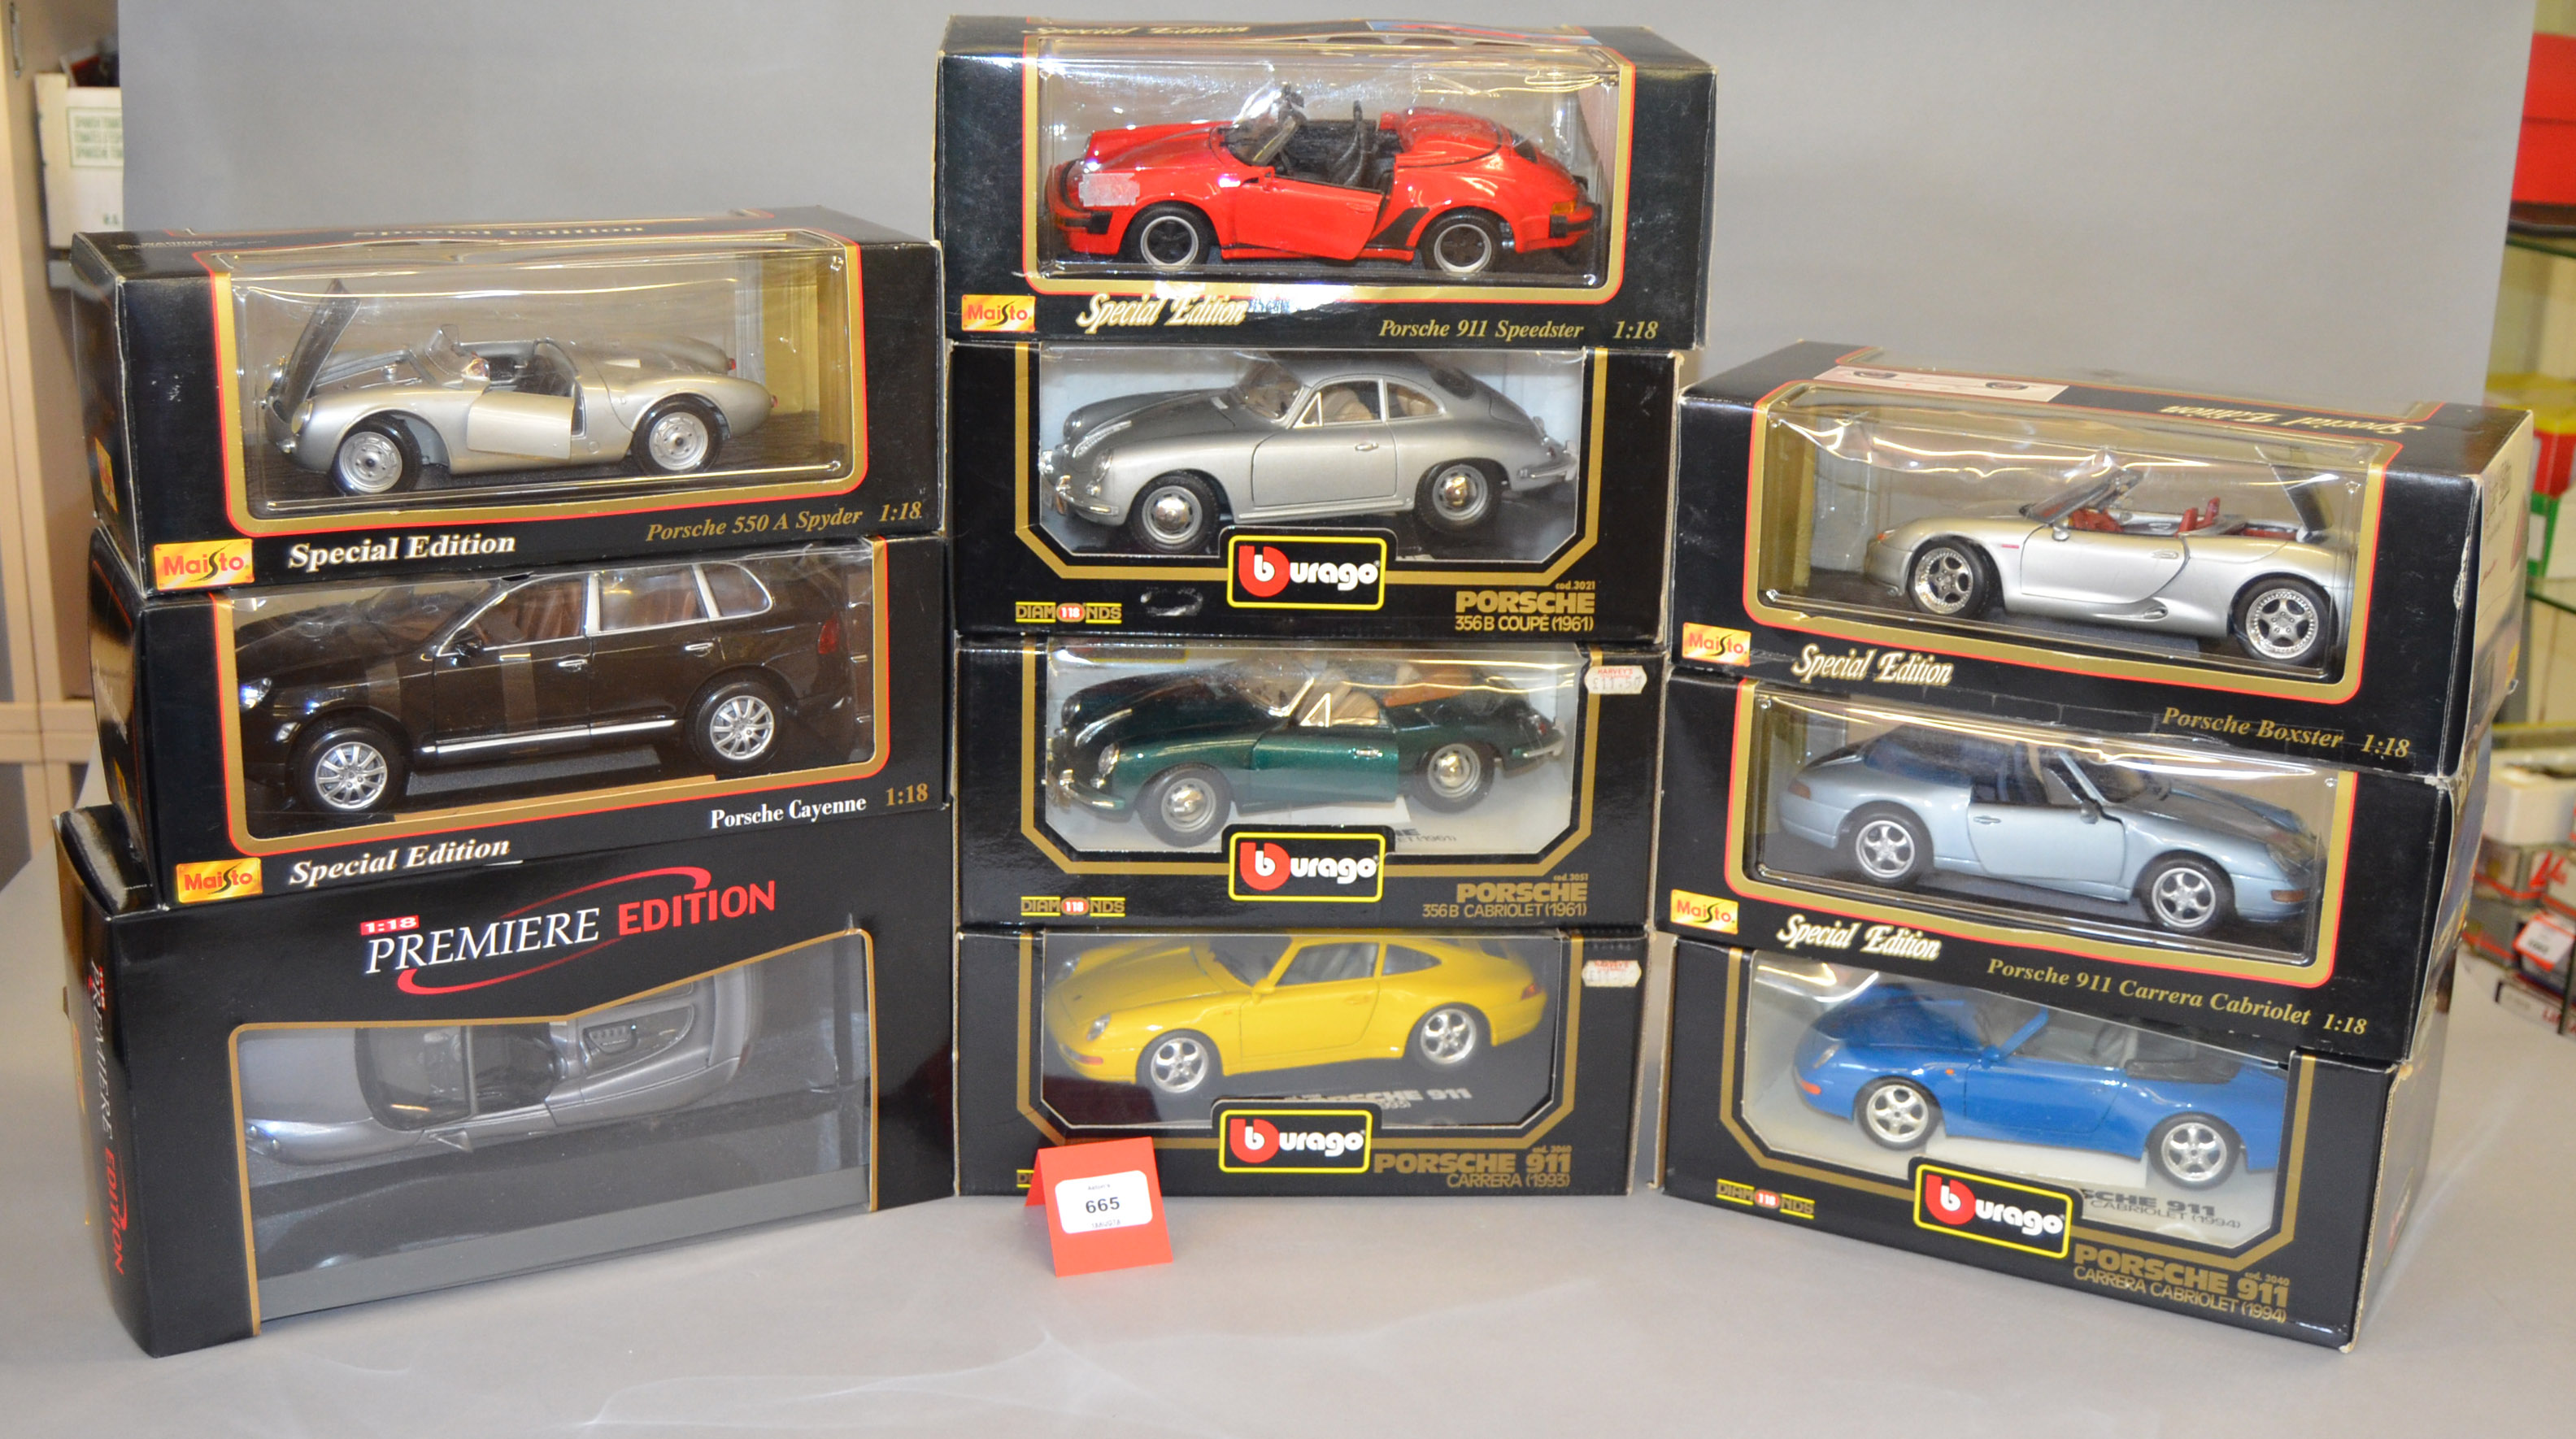 10 x 1:18 scale diecast Porsche model cars by Bburago and Maisto. G-VG, boxed.